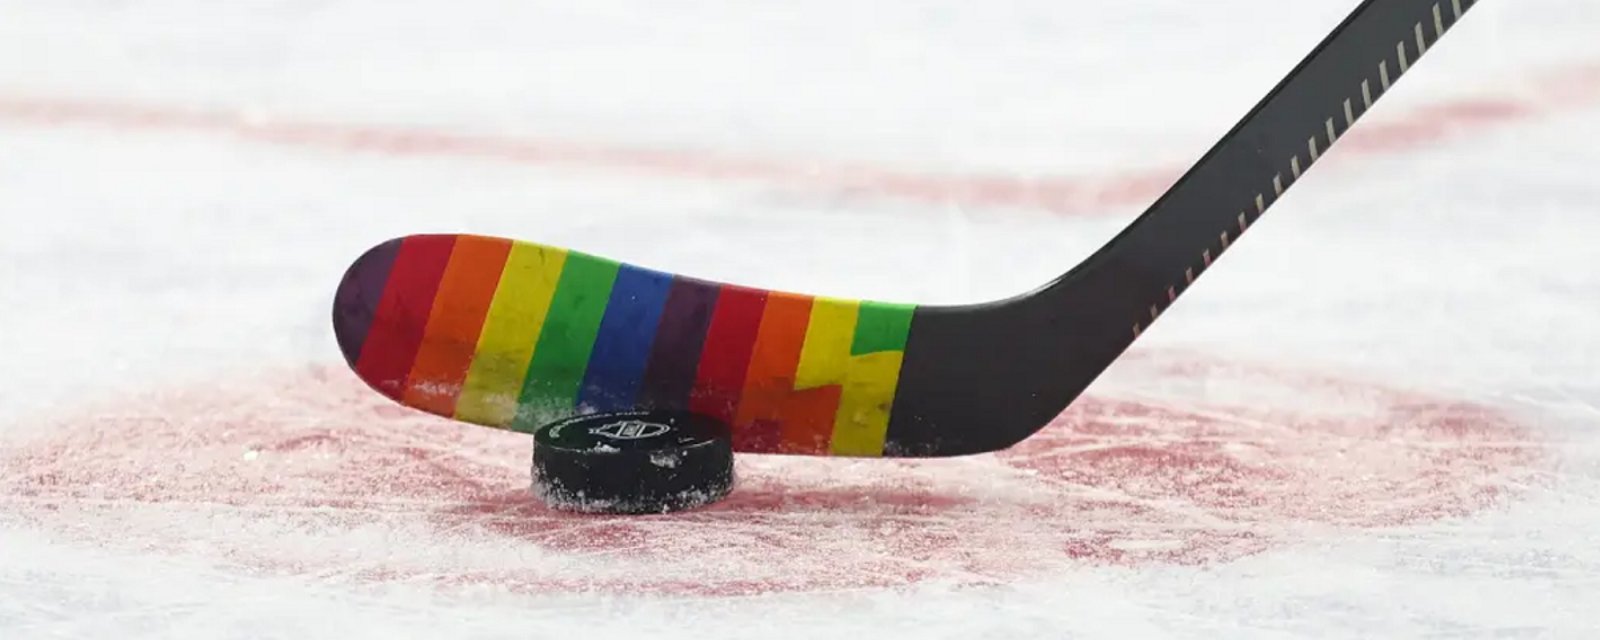 NHL responds to Travis Dermott's illegal use of Pride tape.